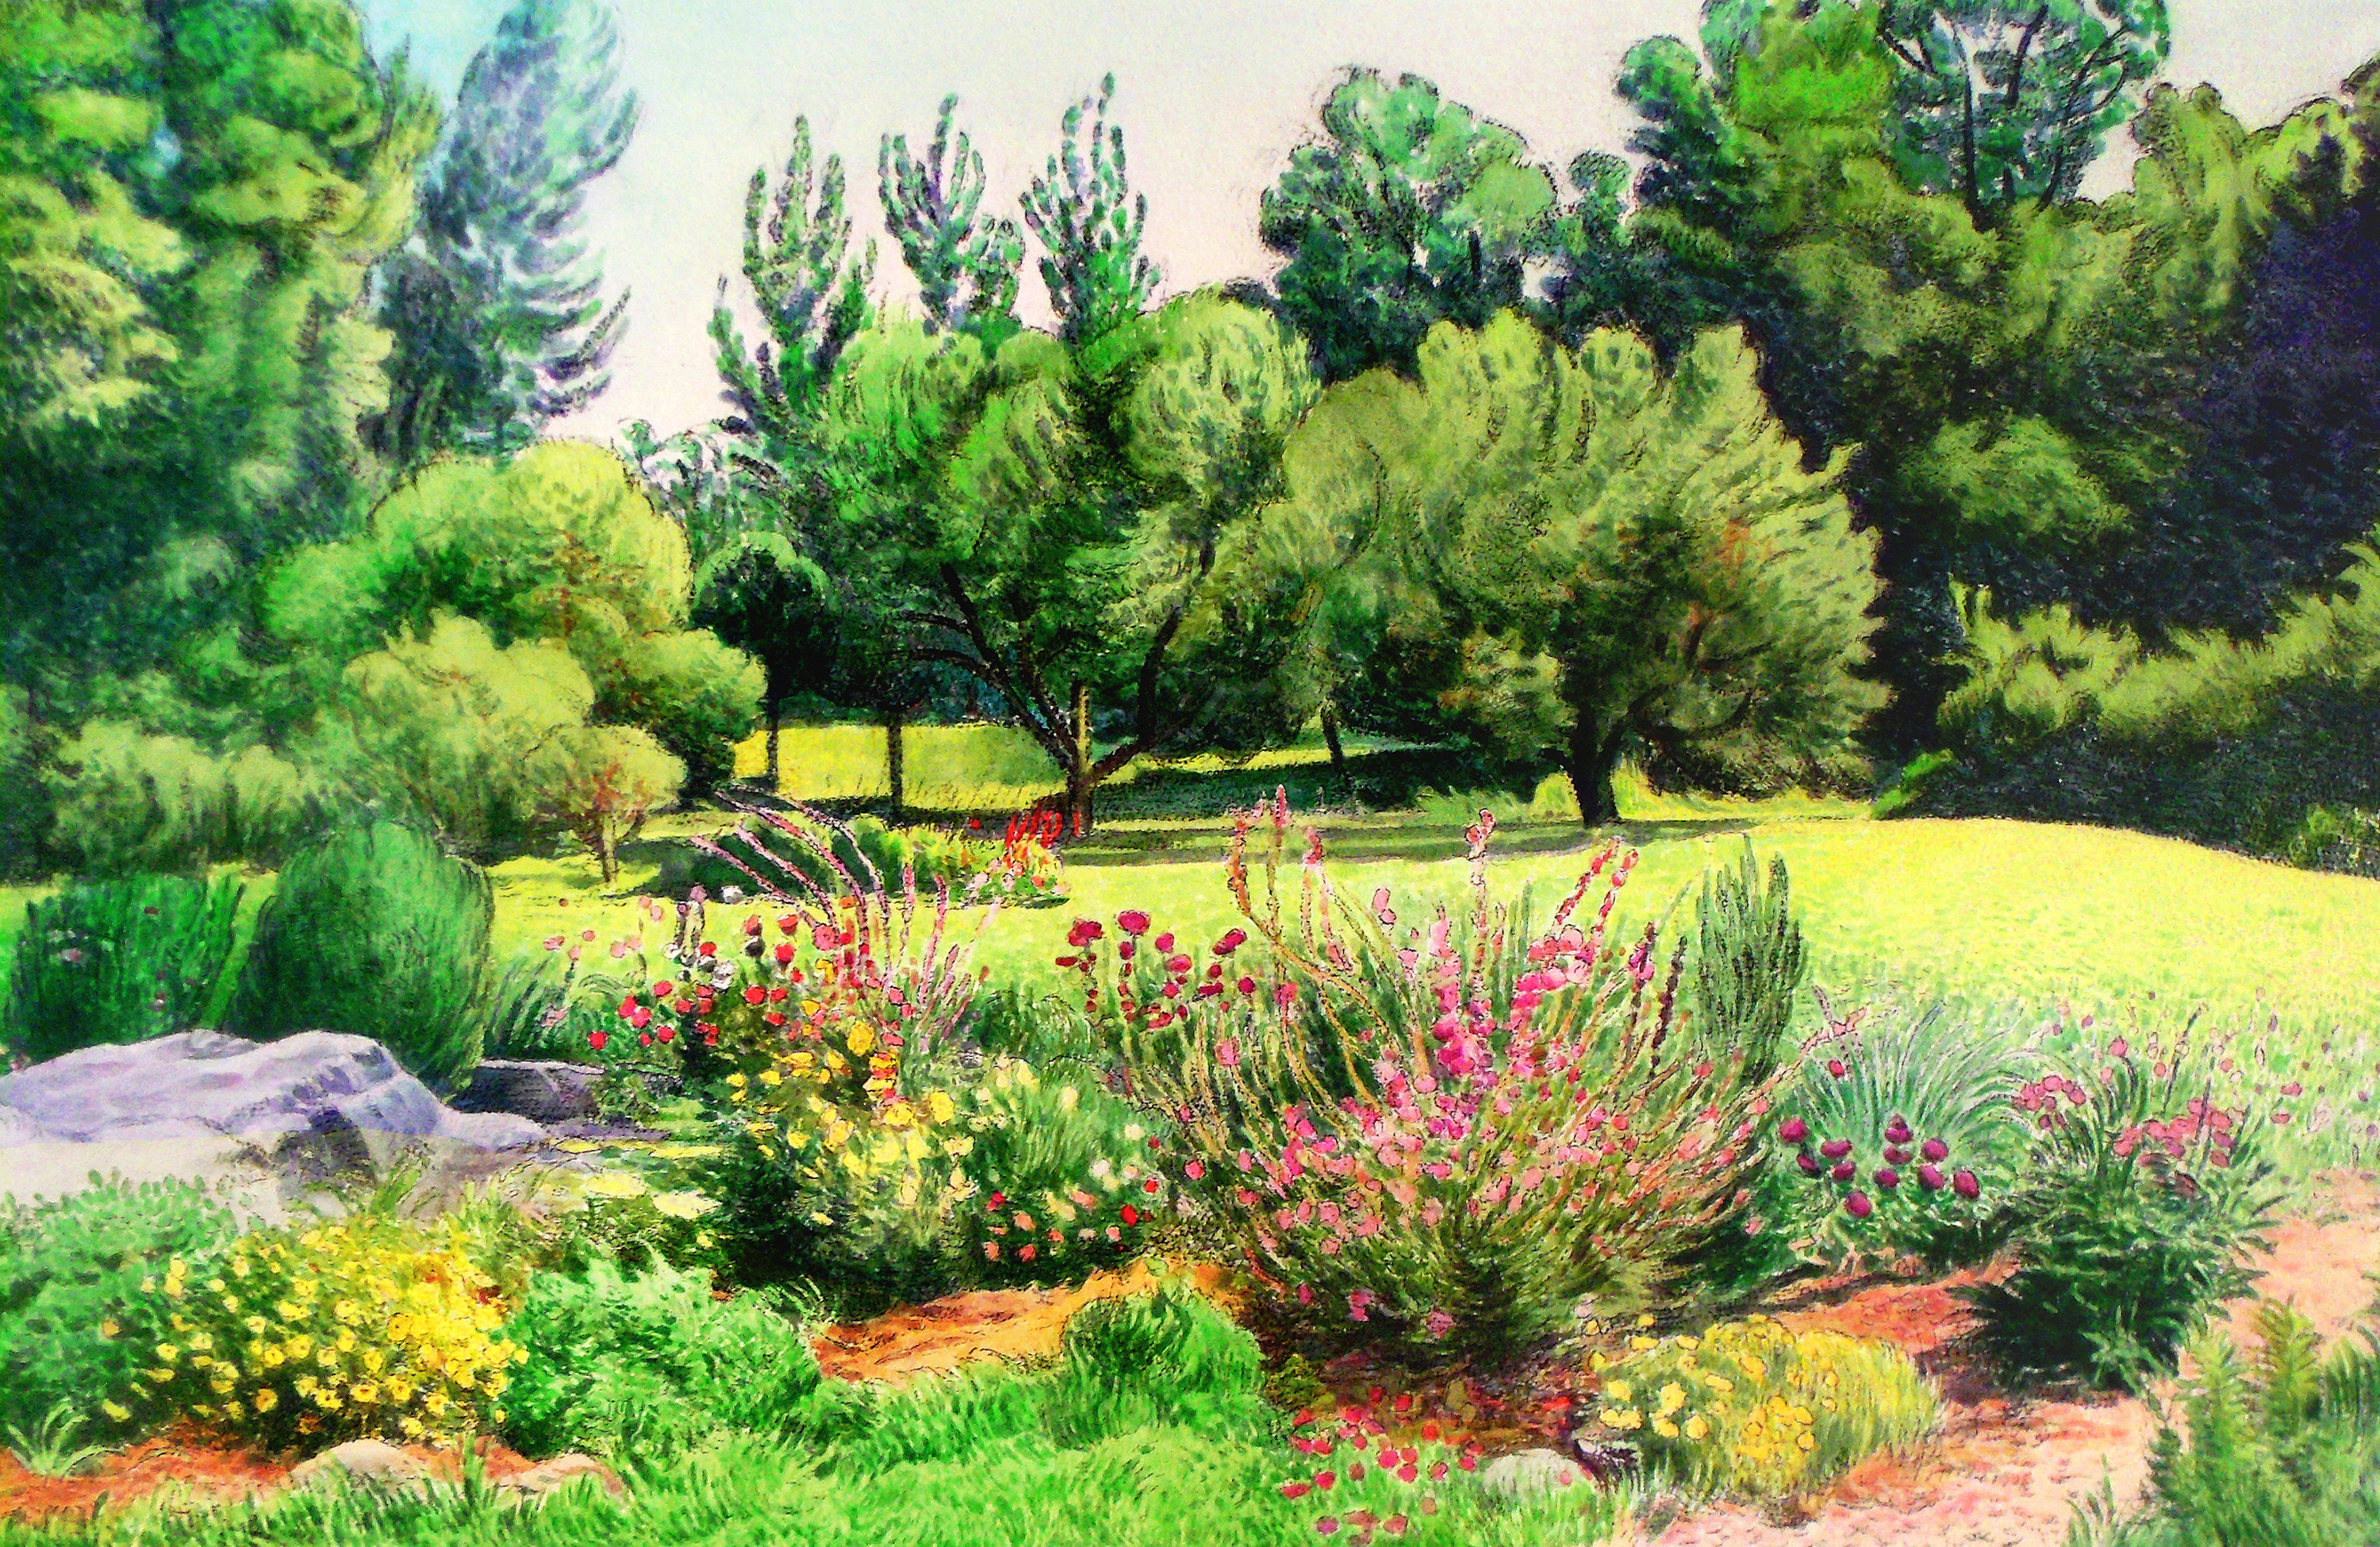 Midsummer garden in oxford ewk5s4 ldzzn6